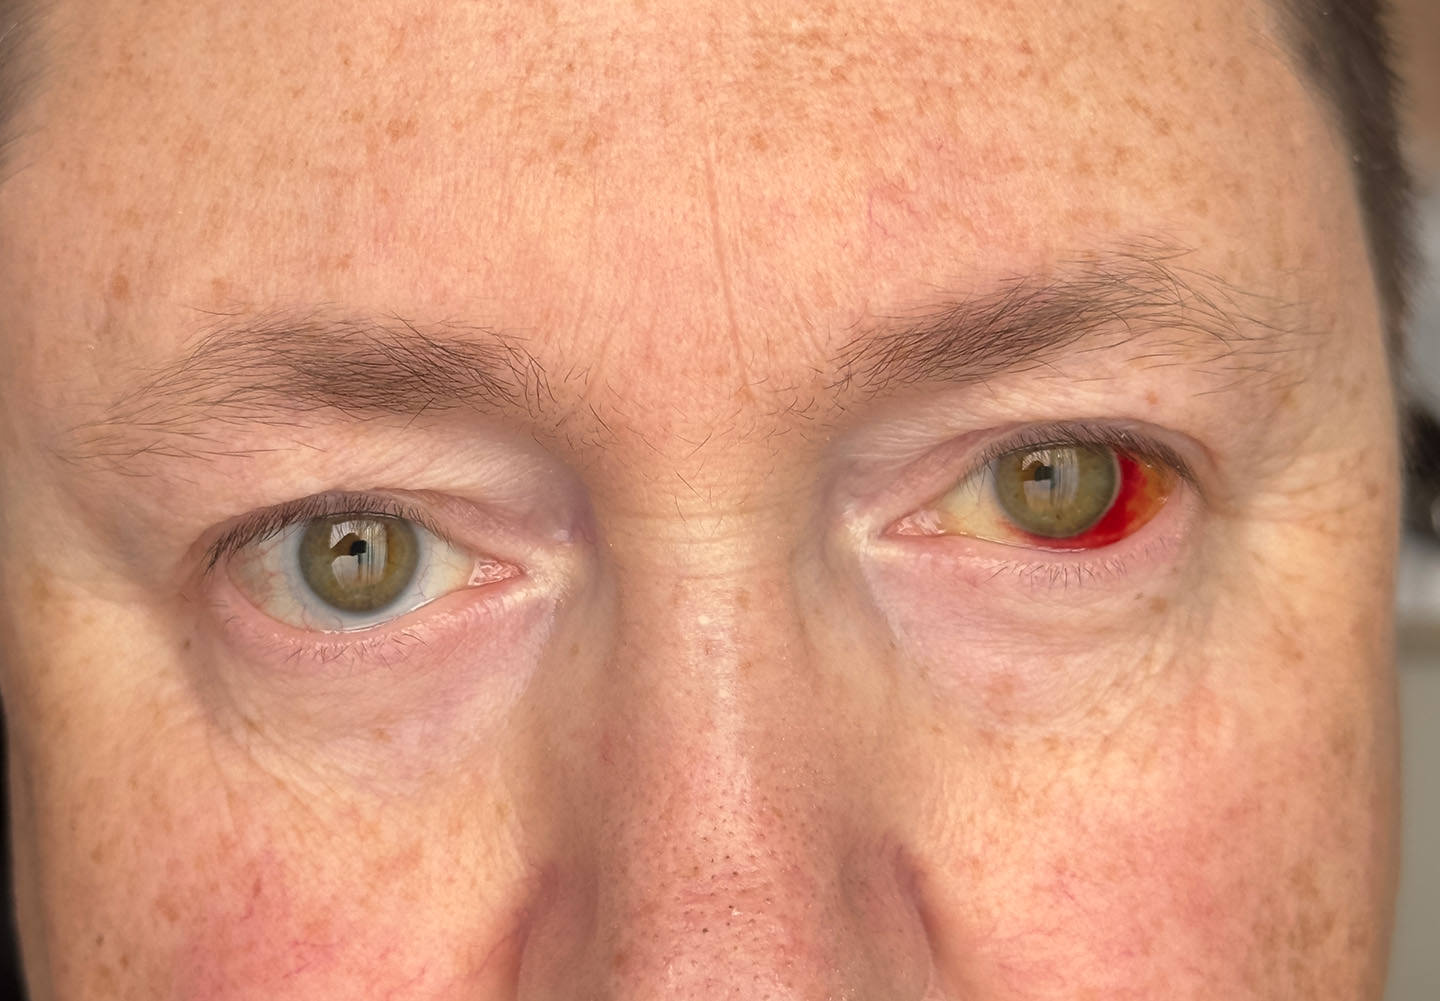 Blood Shot Eye from Cataract Surgery